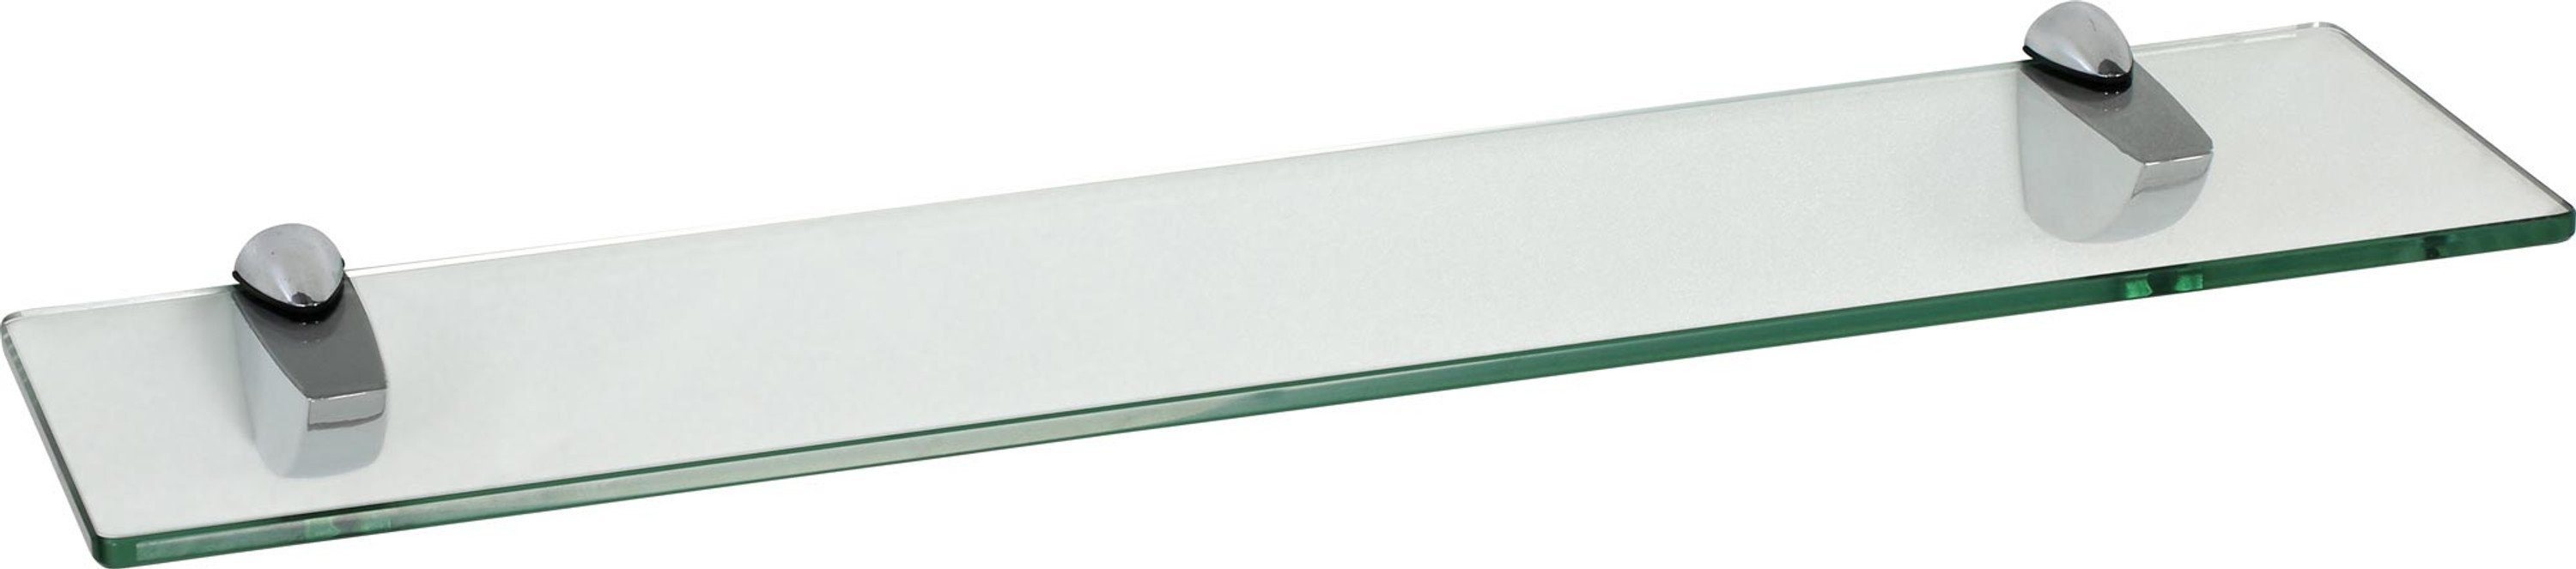 ib style Wandregal Glasregal 8mm eckig klar 40 x 15 cm + Clip PELI Verchromt, Glasboden aus ESG-Sicherheitsglas - Wandregal